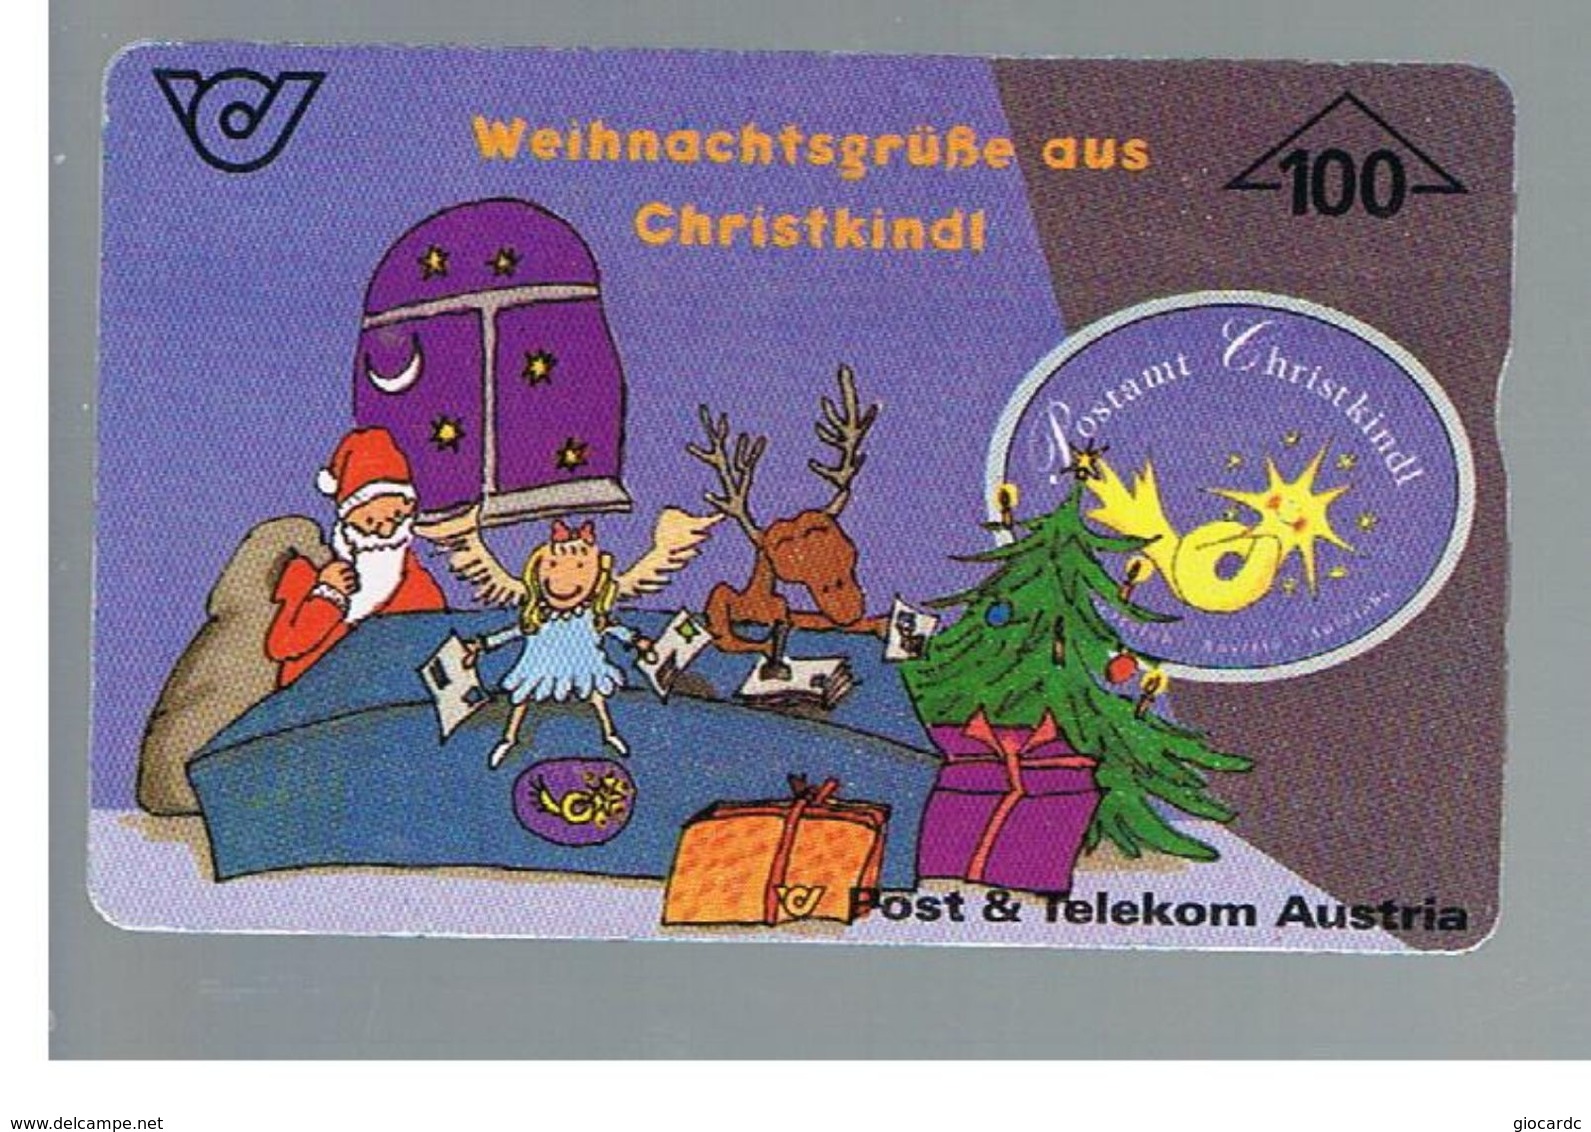 AUSTRIA - TELEKOM AUSTRIA L&G - 1996 CHRISTKINDL    -     USED - RIF. 10274 - Noel